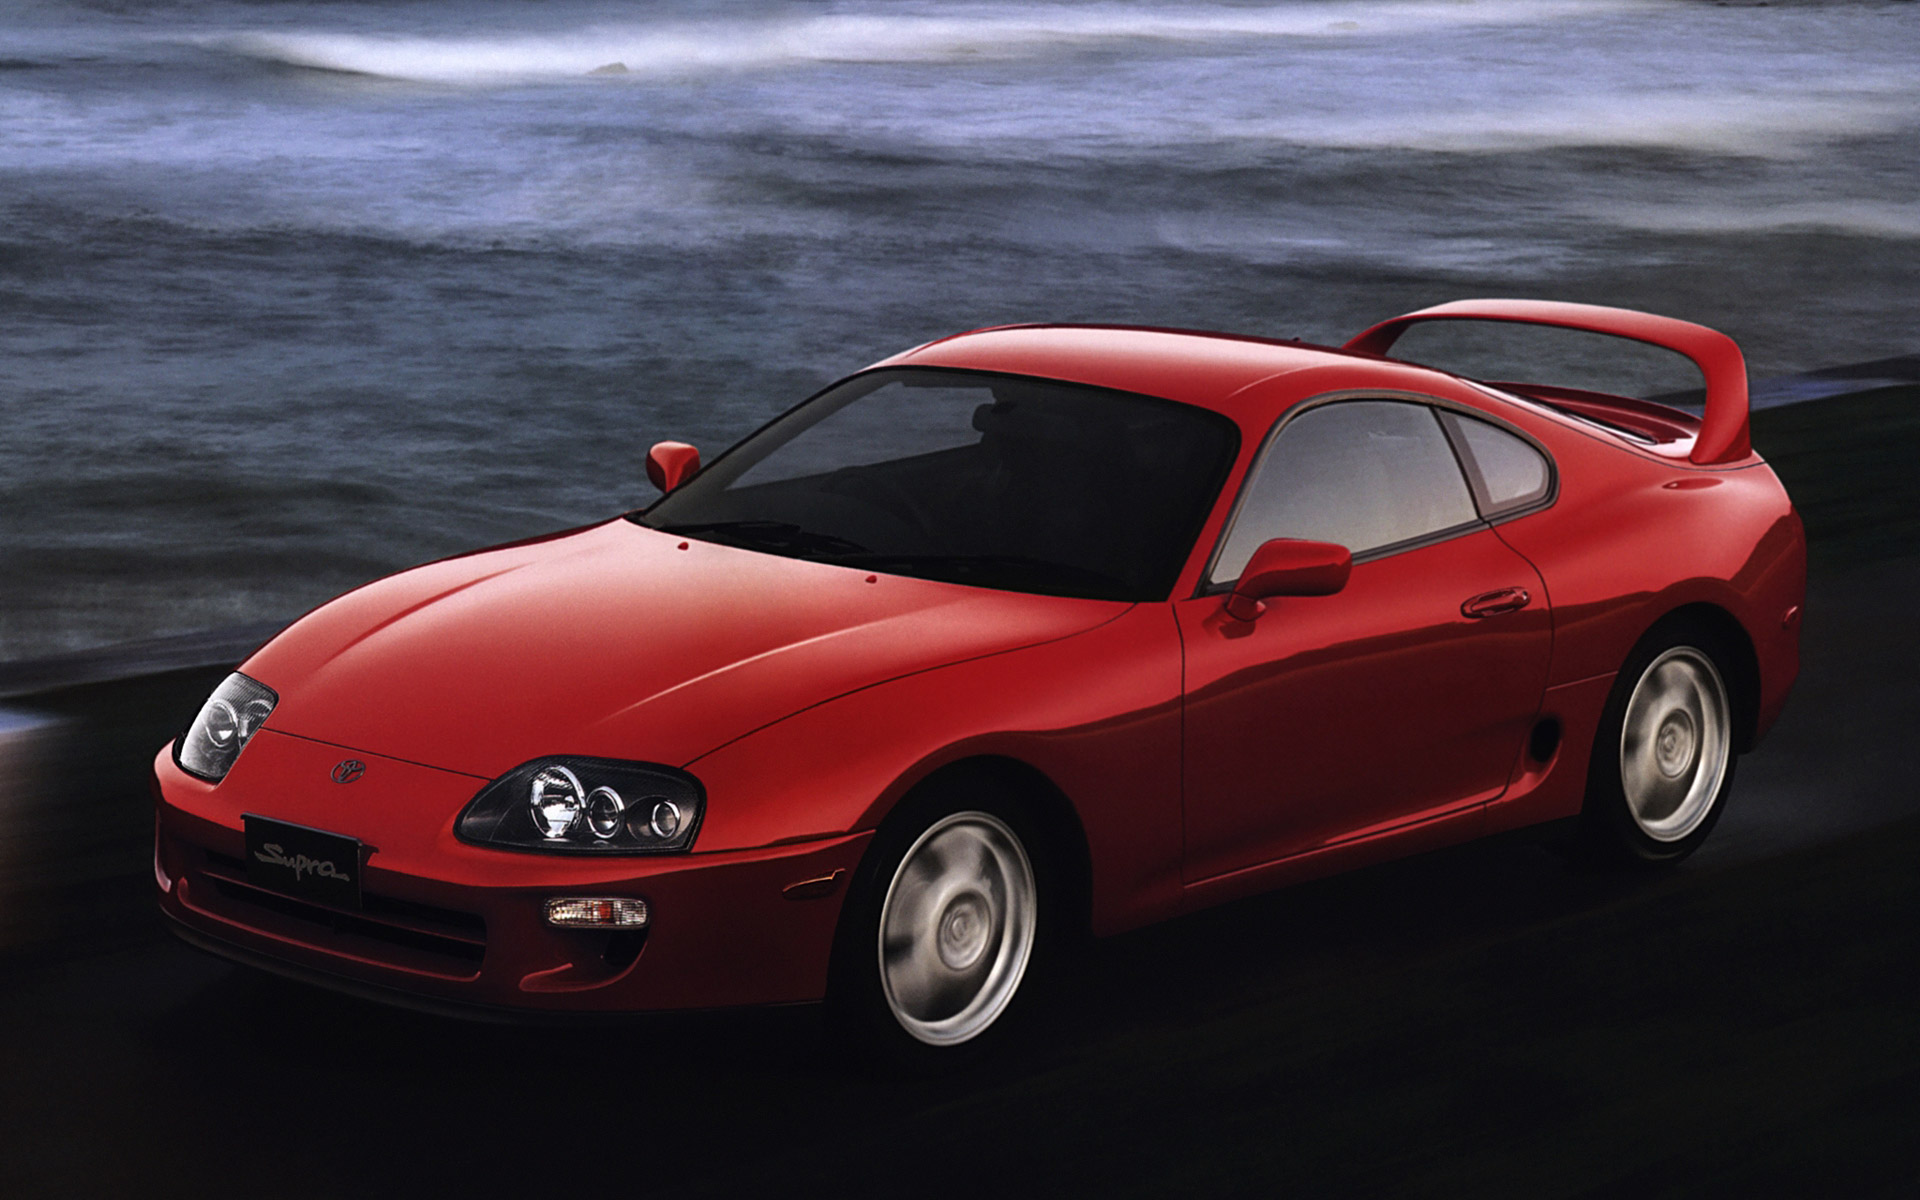  1997 Toyota Supra Wallpaper.